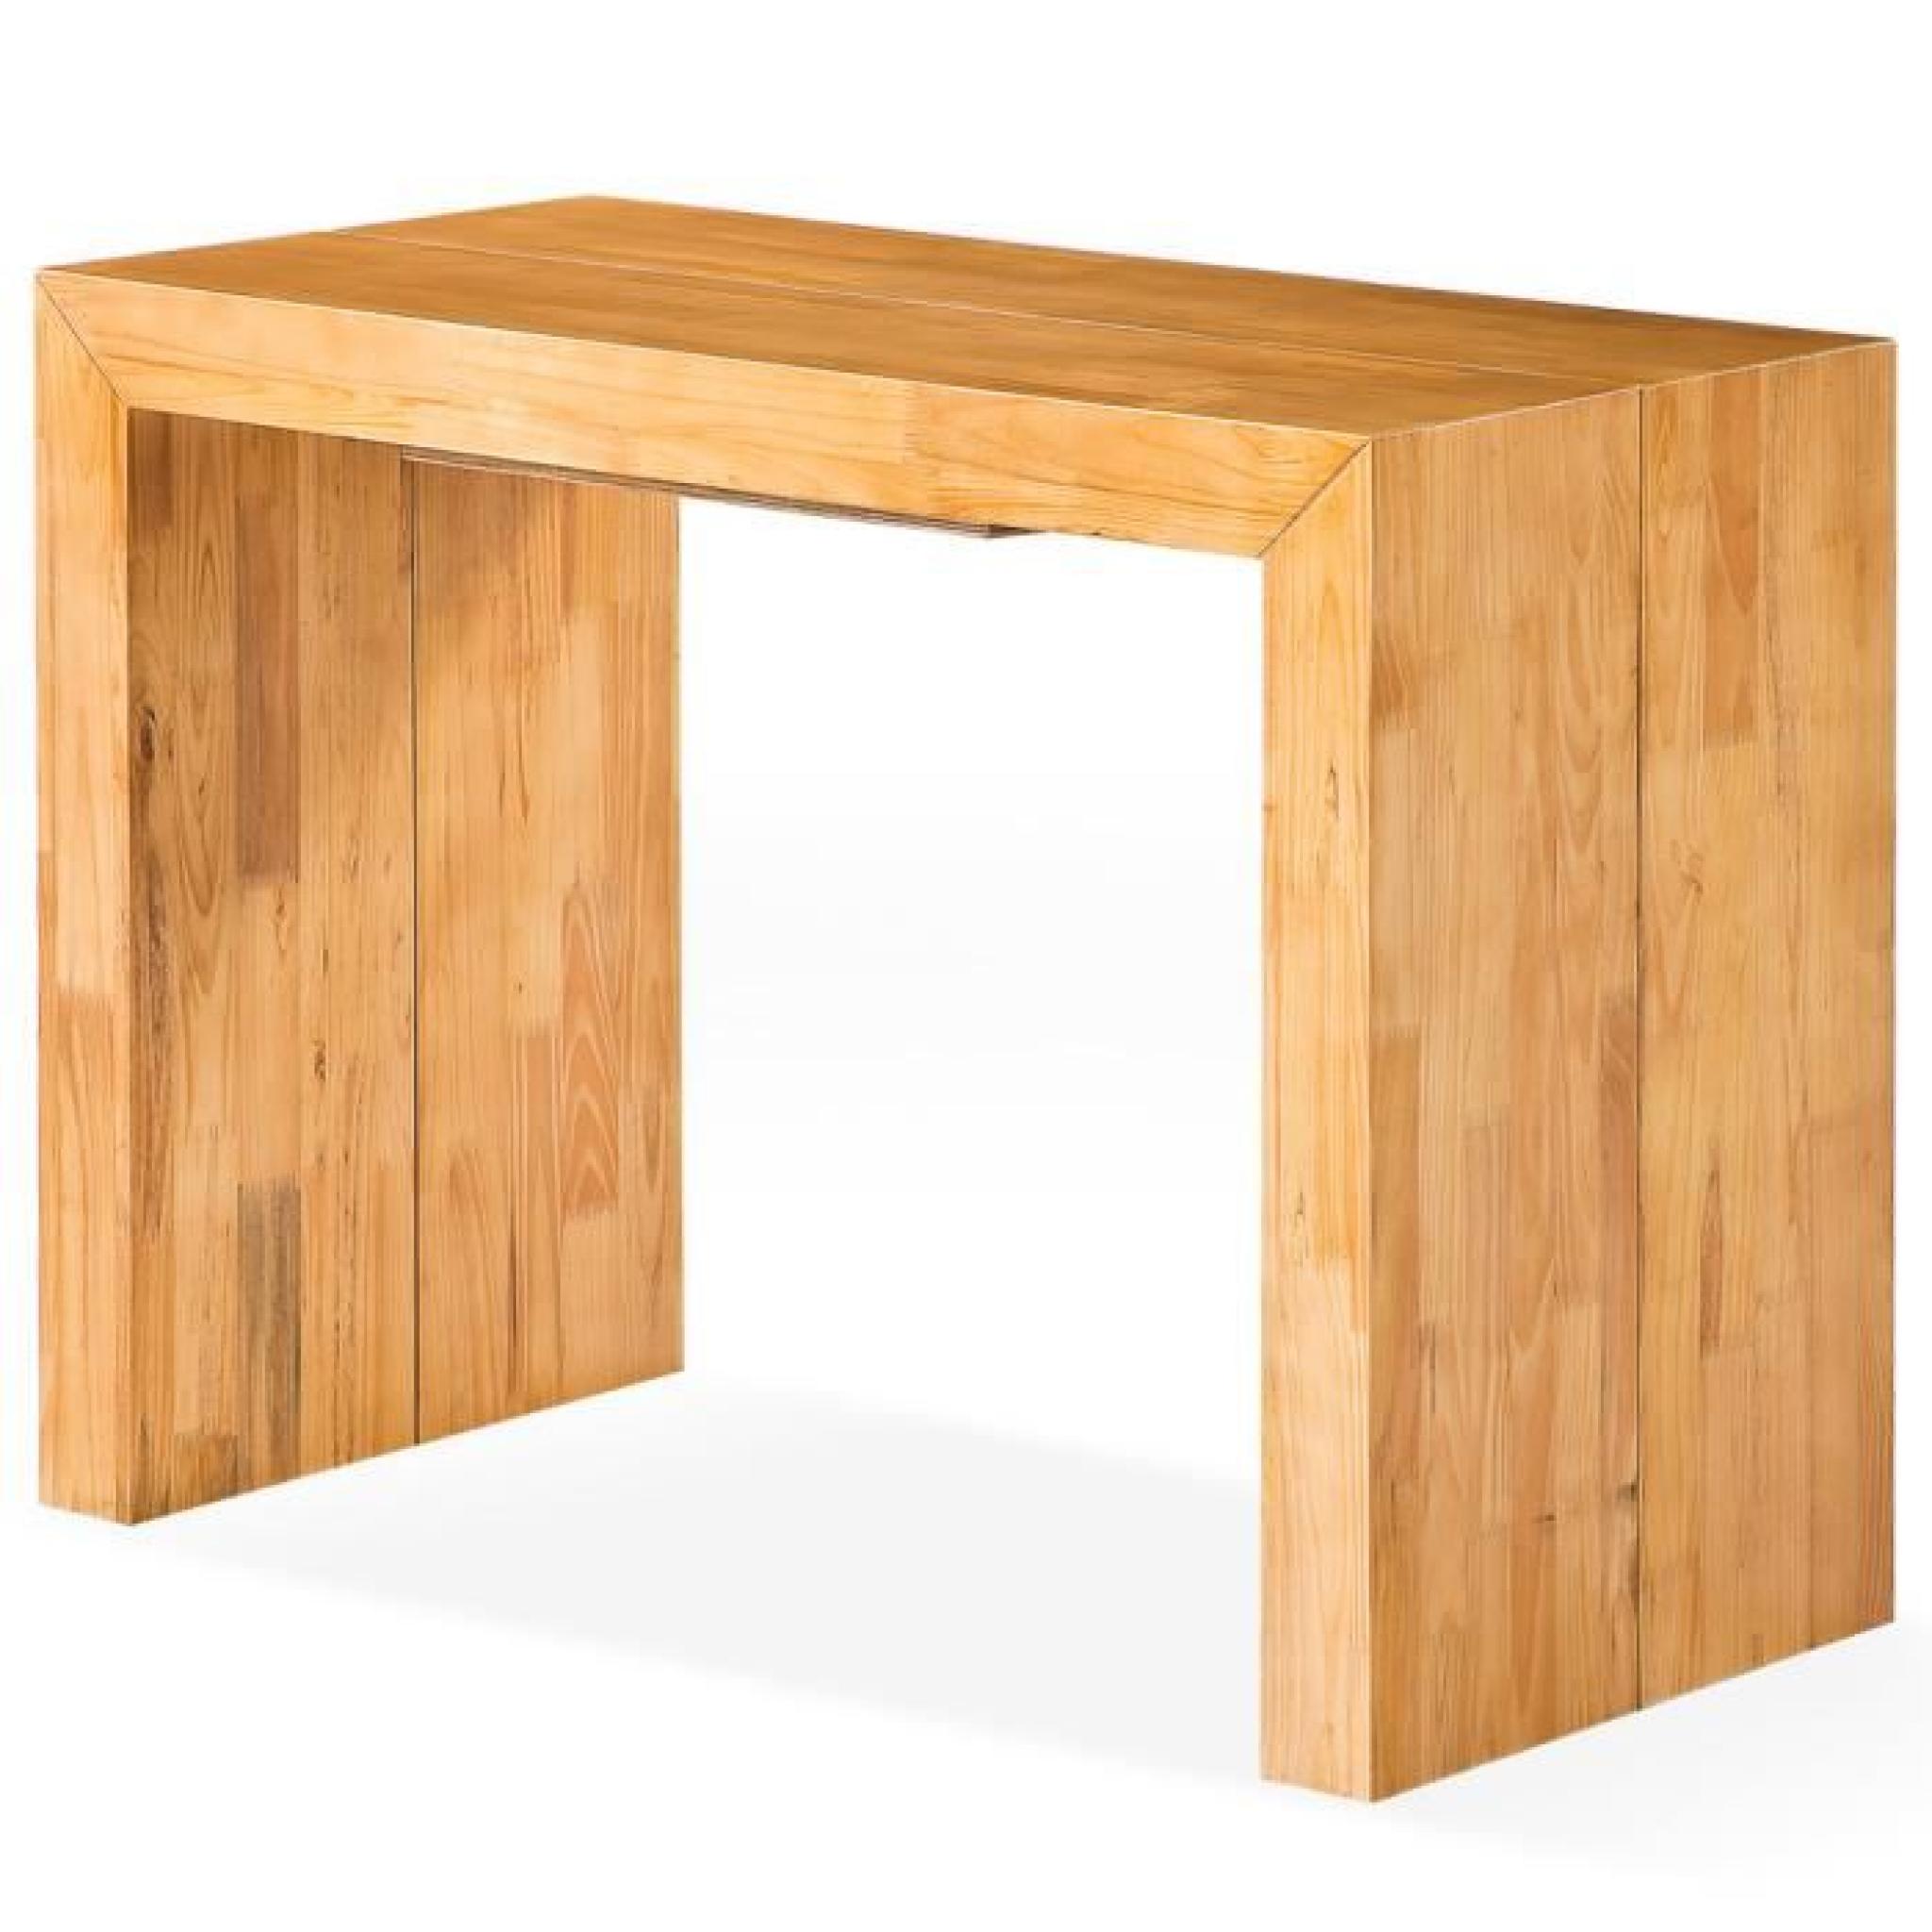 Table Console Woodini XL Chêne clair